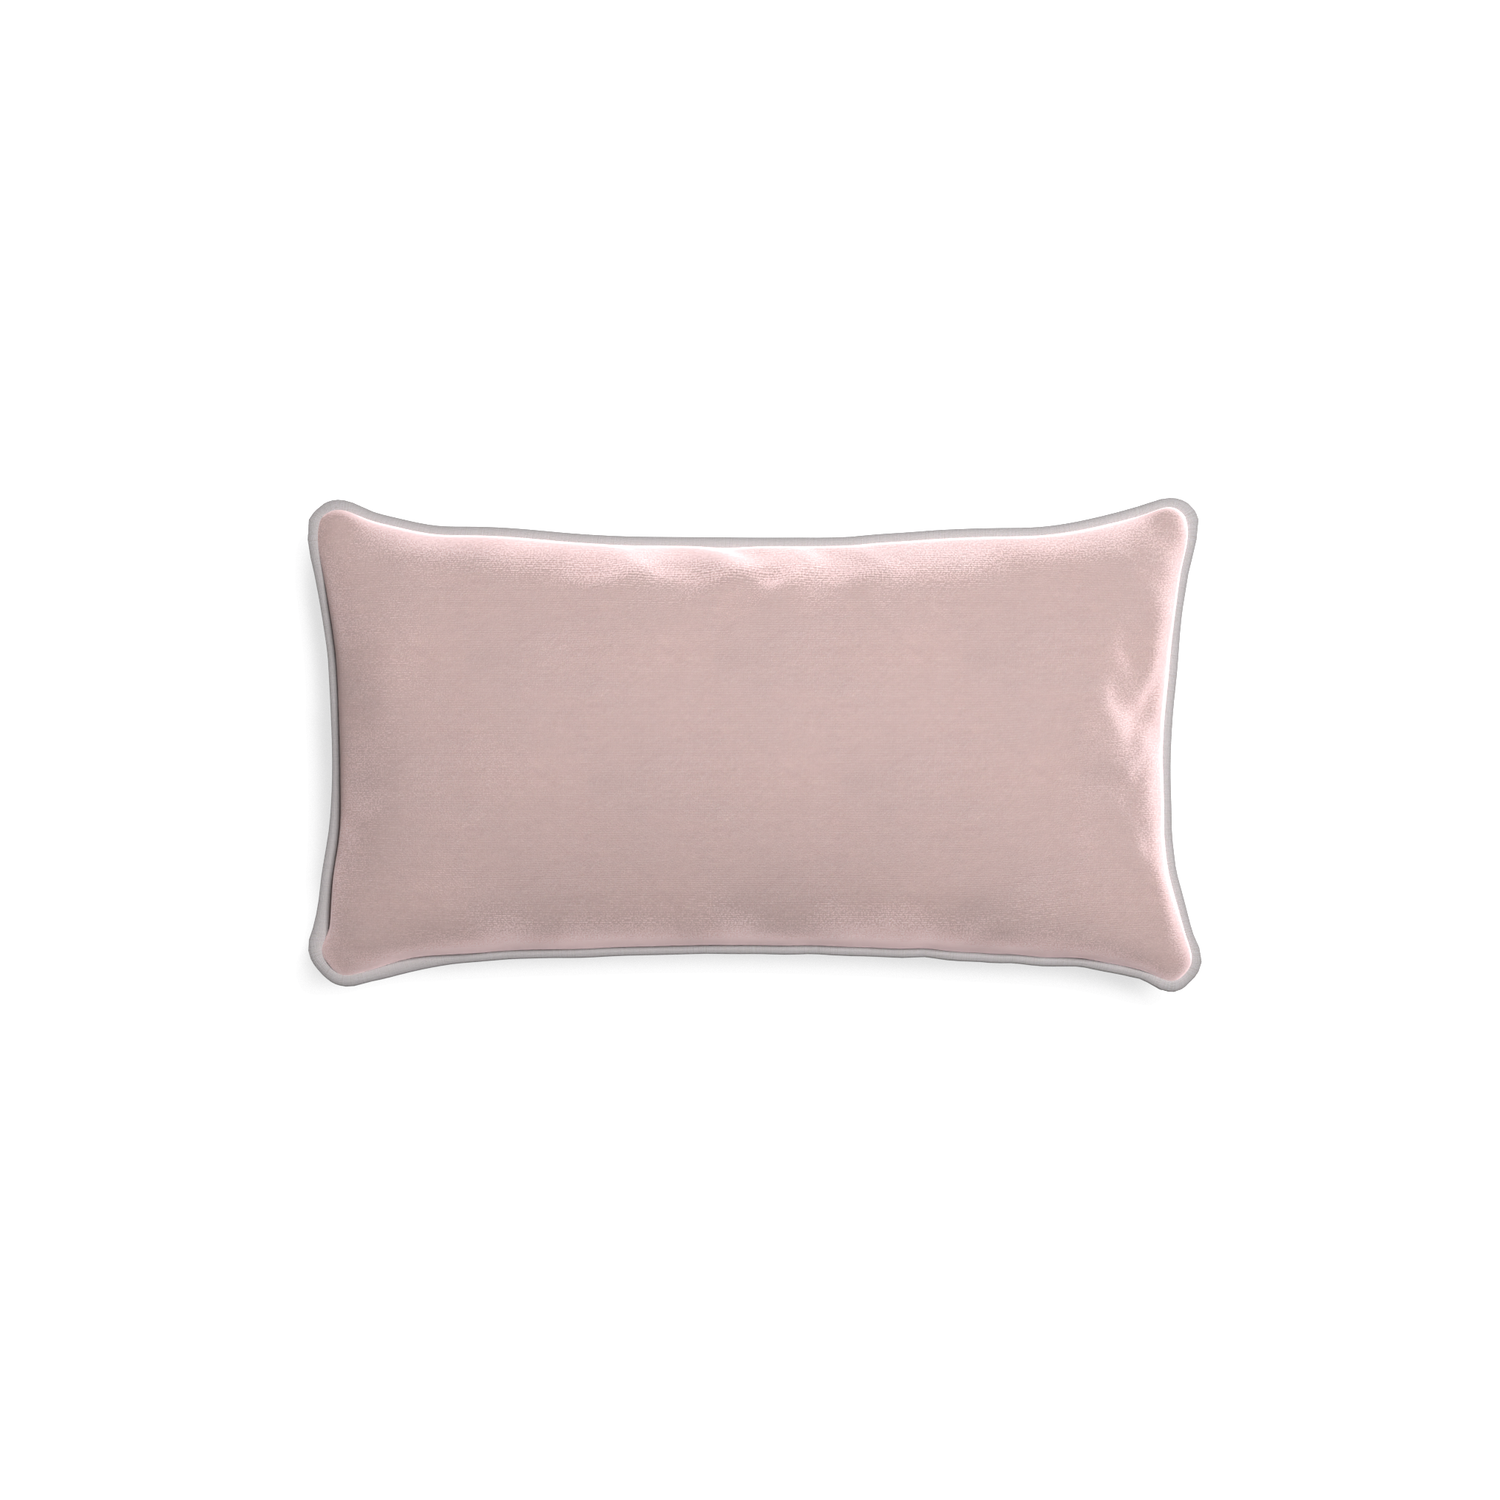 rectangle light pink velvet pillow with light grey piping 